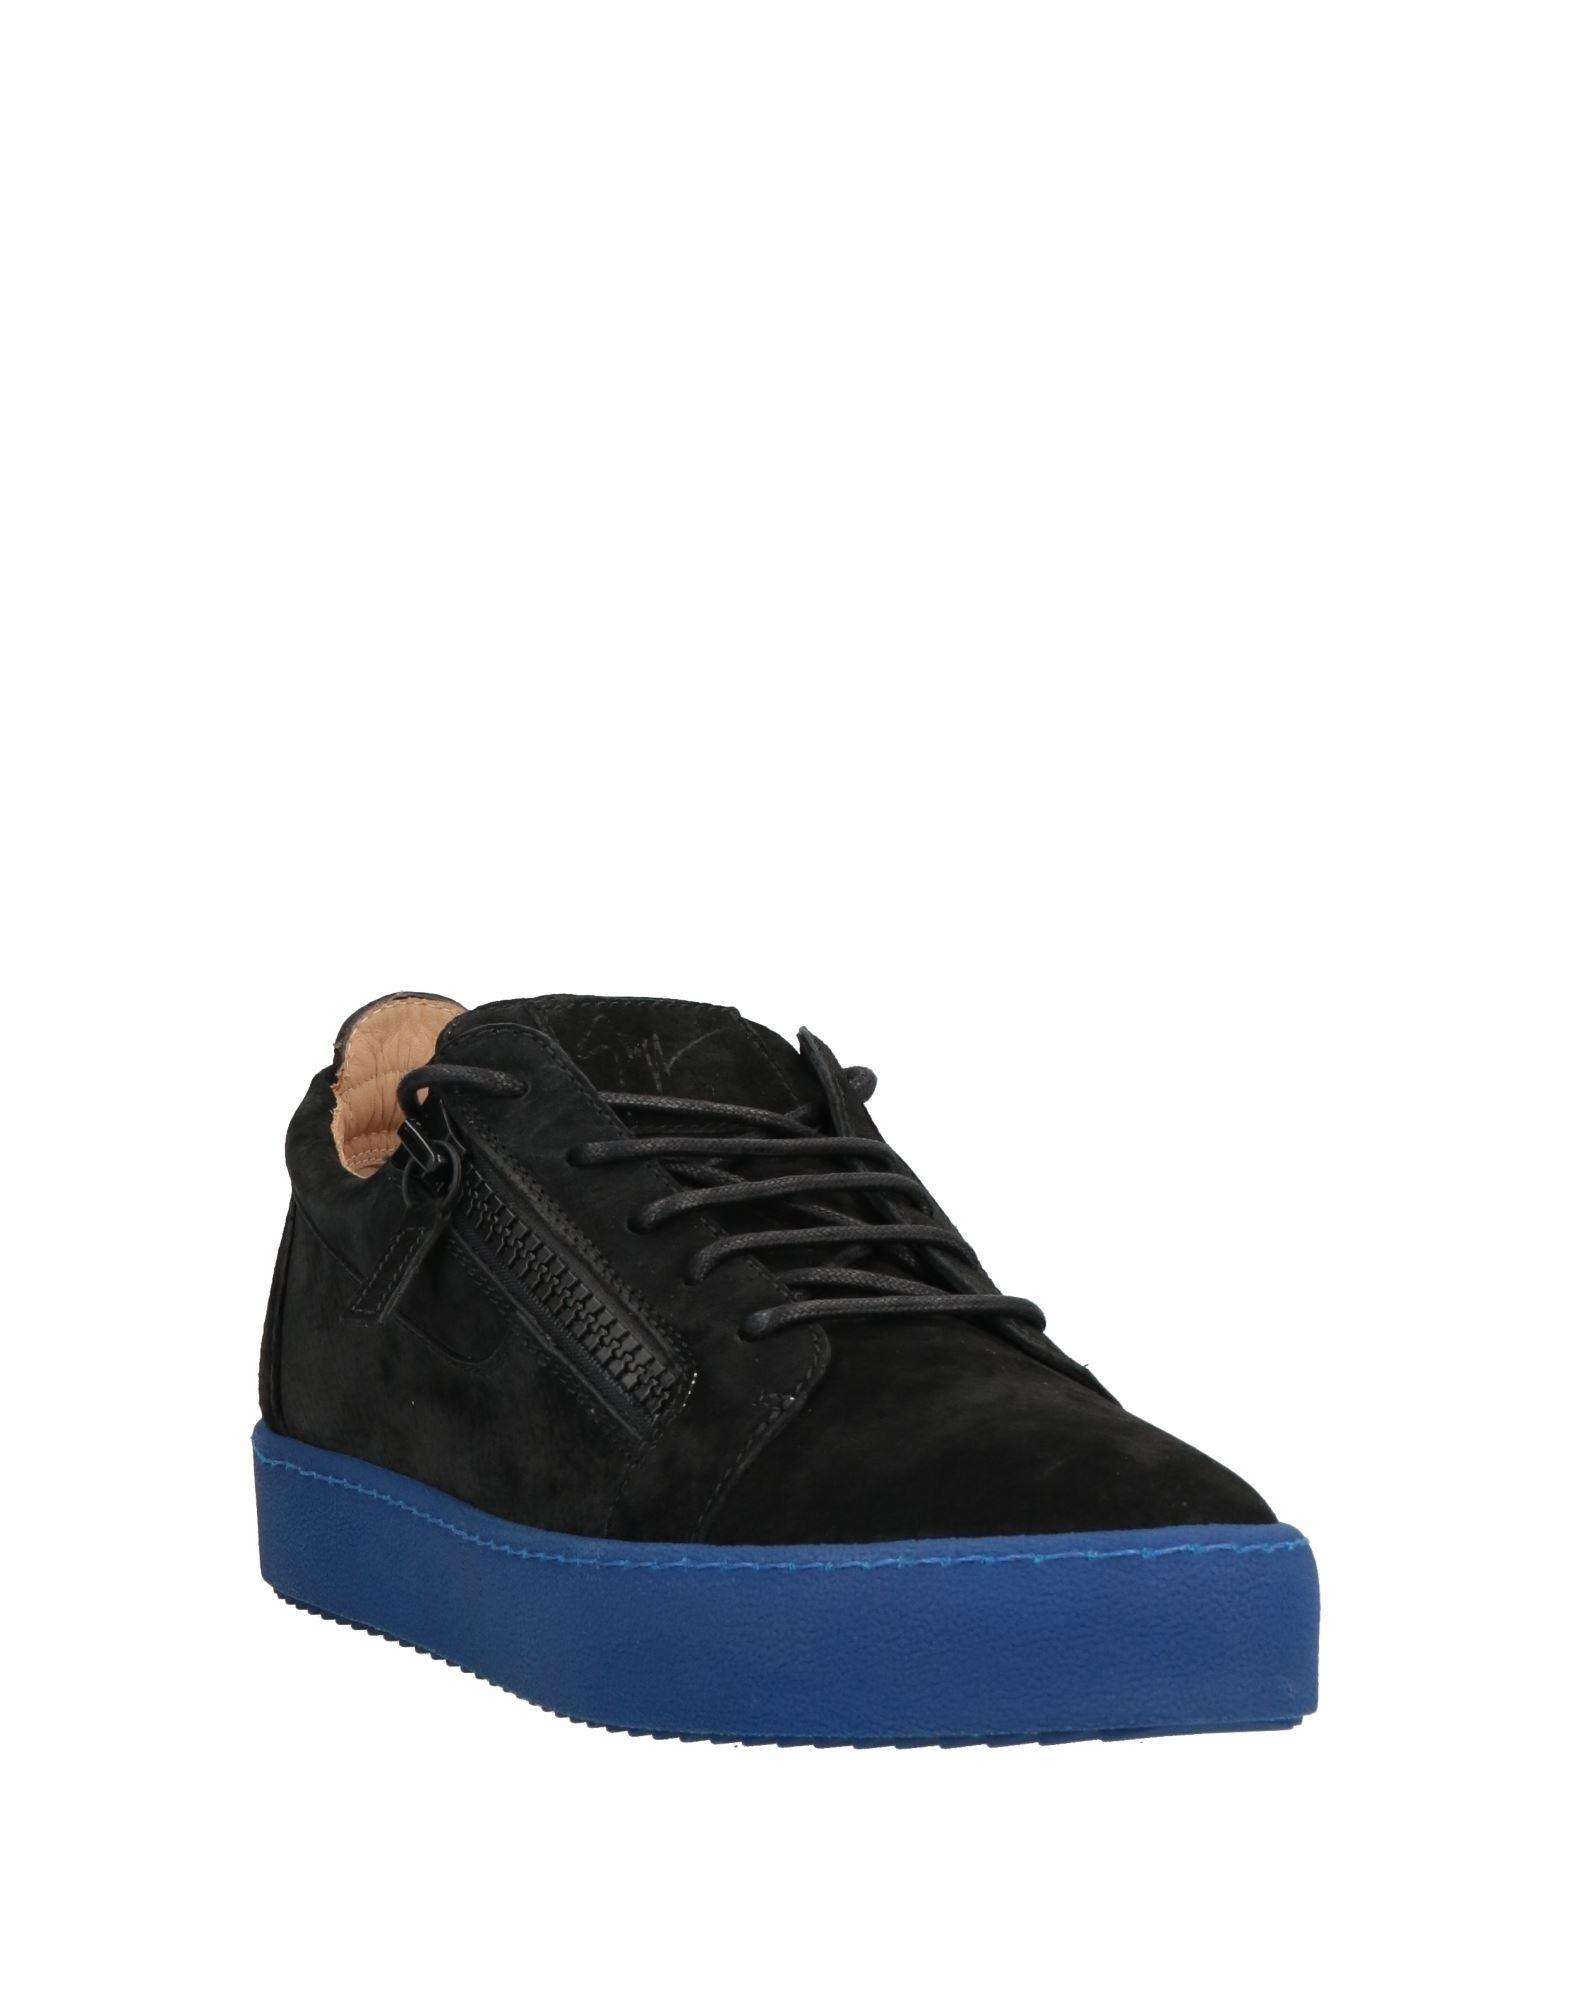 Giuseppe Zanotti Leder Hohe Sneakers Aus Leder Mit Krokodilimitat in Blau für Herren Herren Schuhe Sneaker Hoch Geschnittene Sneaker 